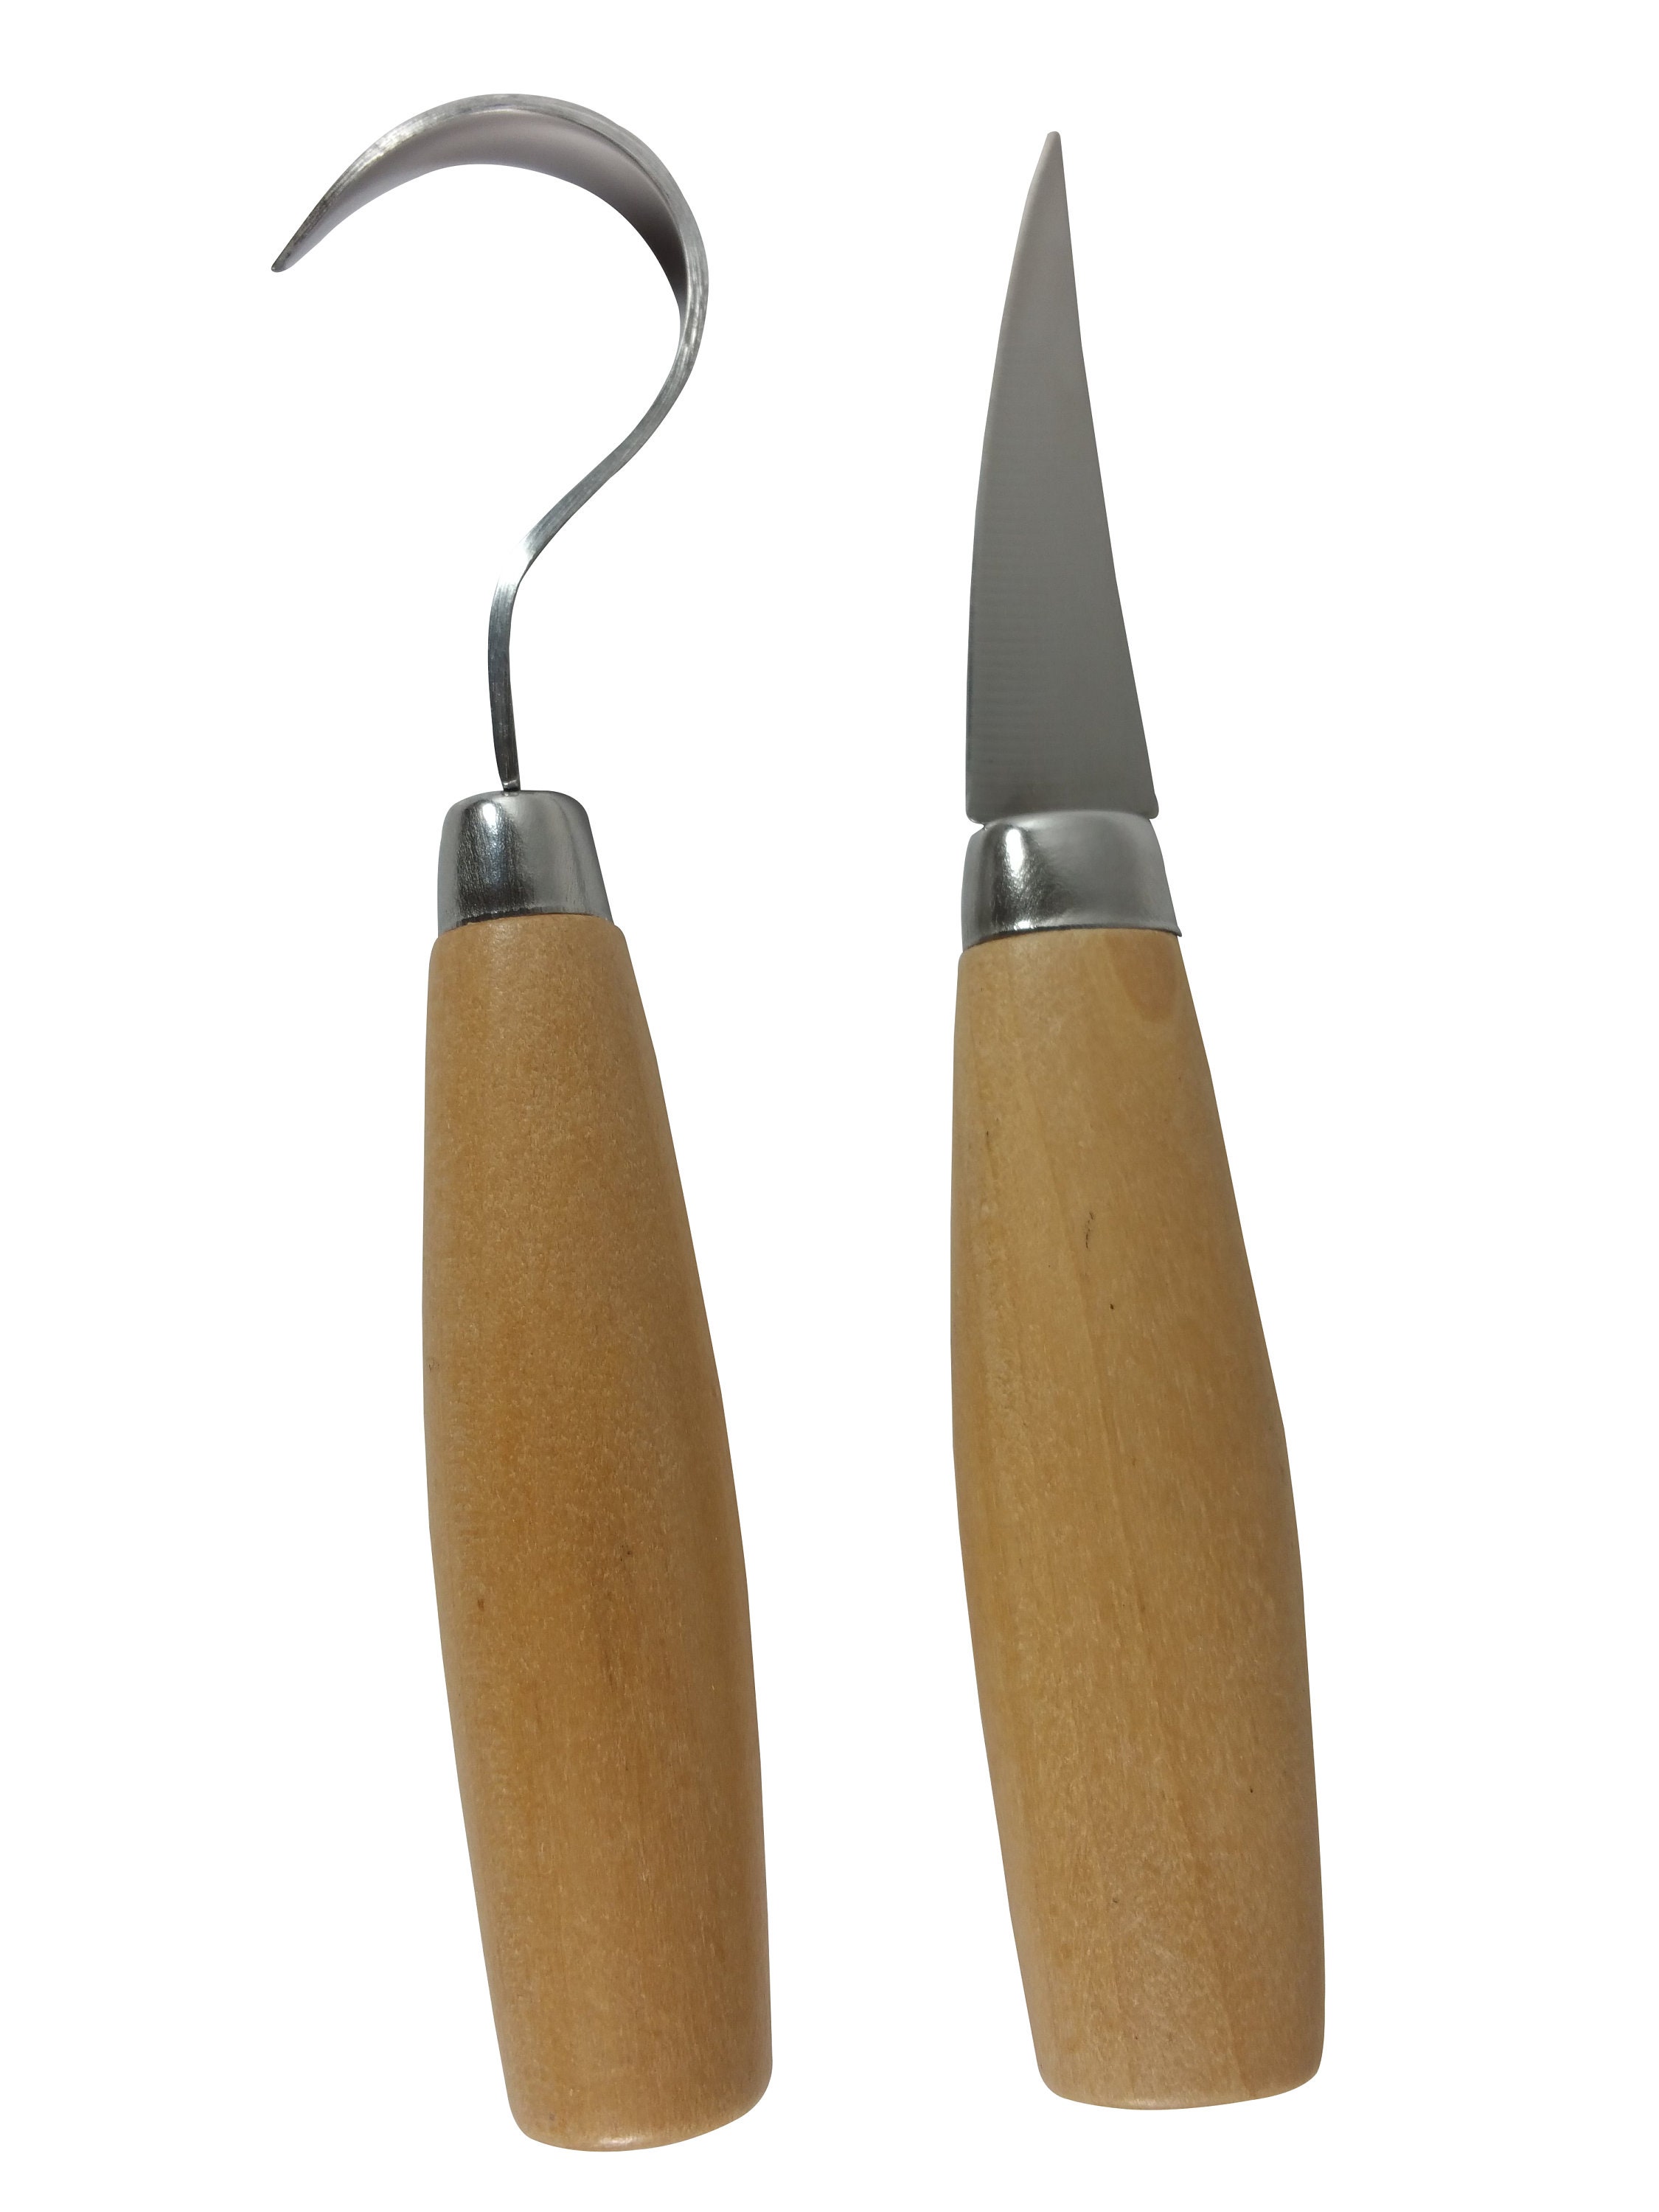 3Pcs Wood Carving Knife Cutter Whittling Hook Kit 155mm DIY Craft